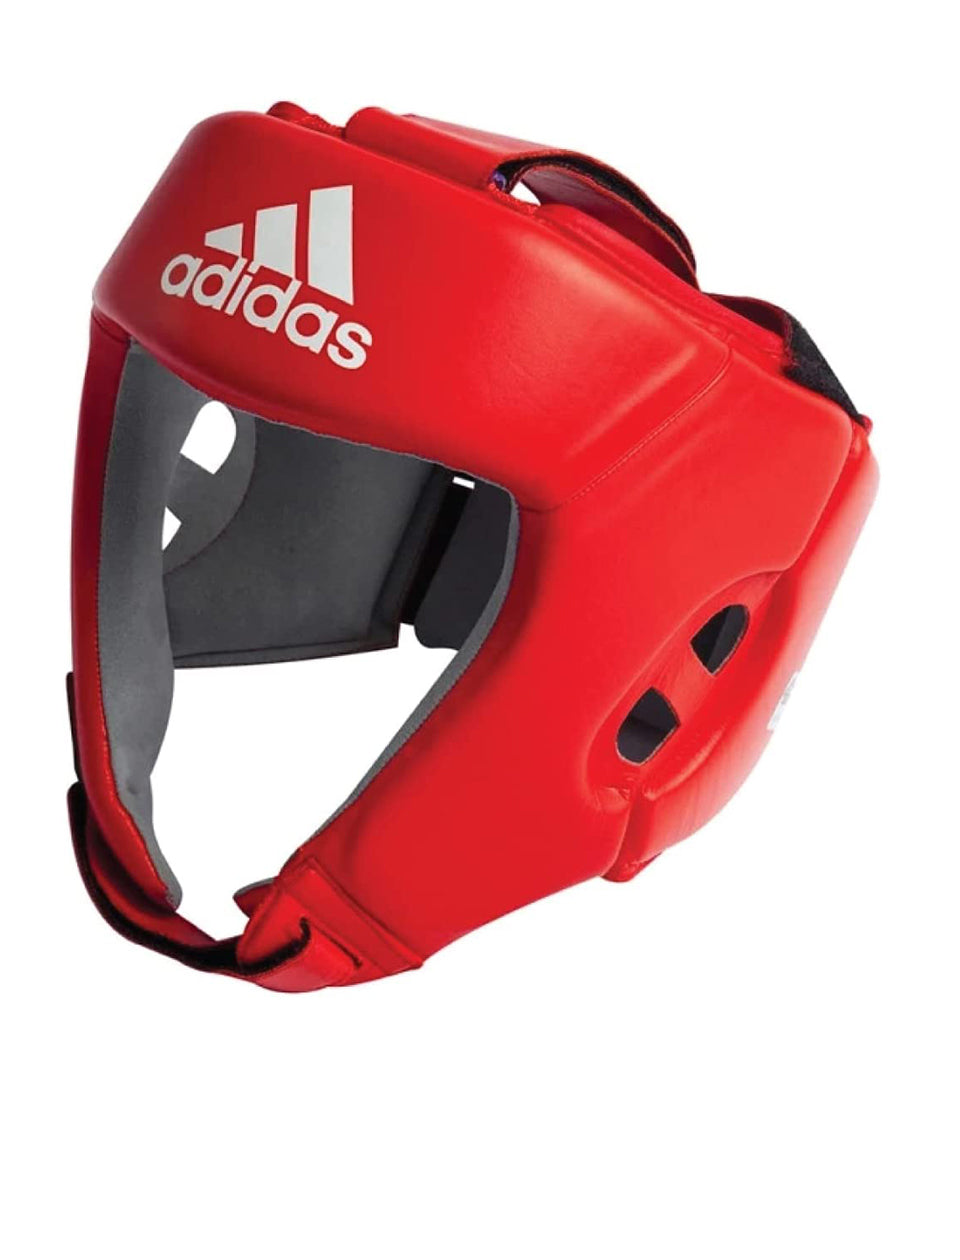 Adidas AIBA Approved Boxing Head Guard, Medium, Red